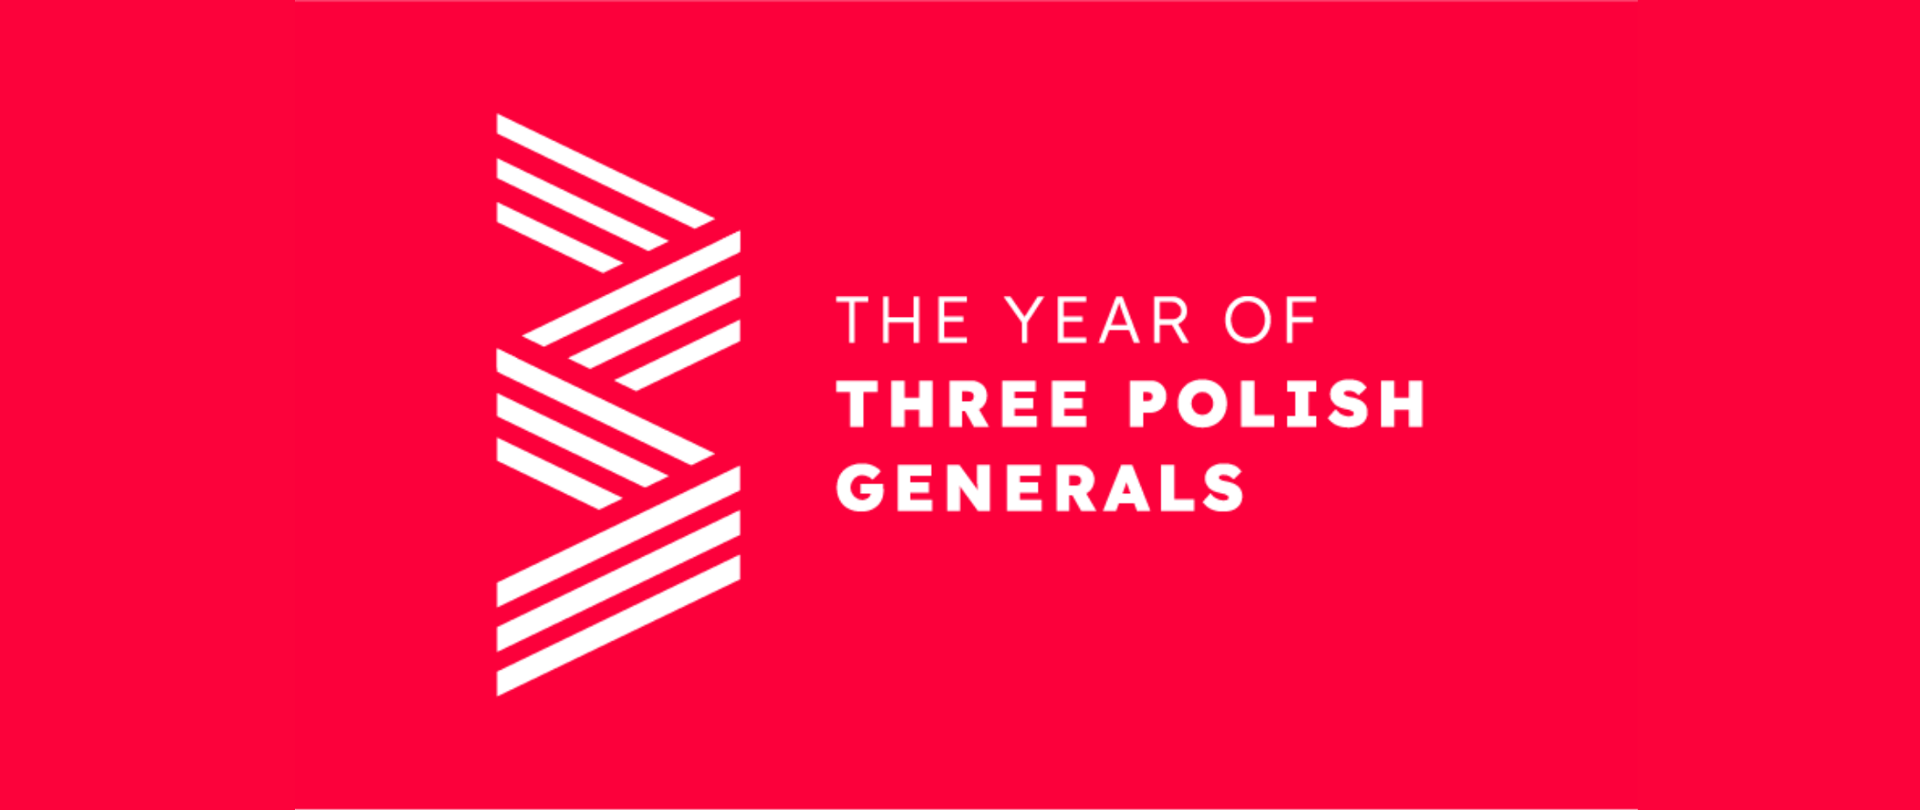 The Year of Three Polish Generals